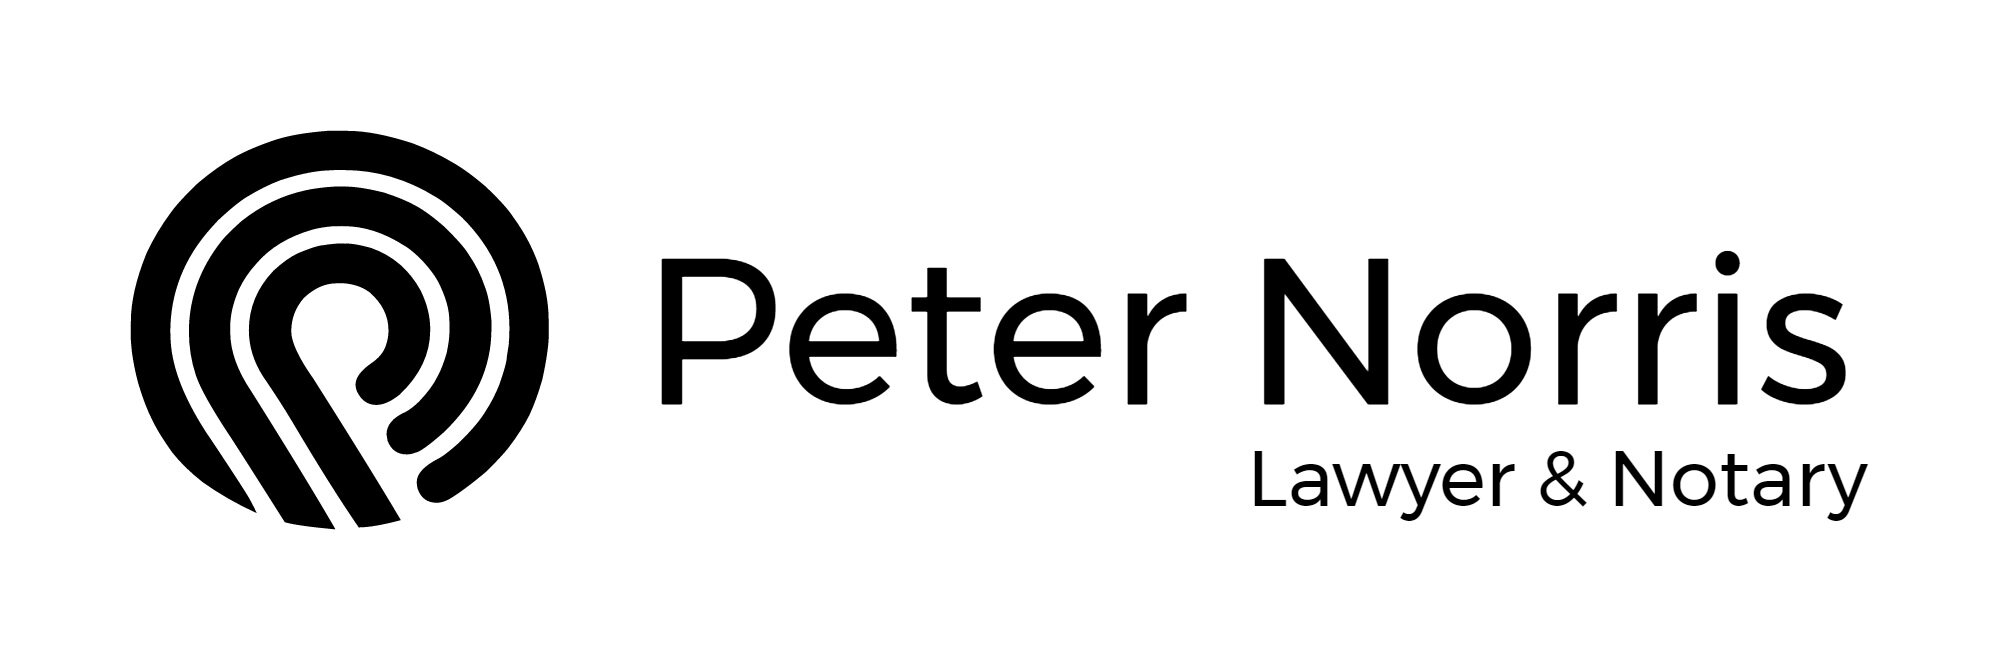 Peter Norris - Lawyer